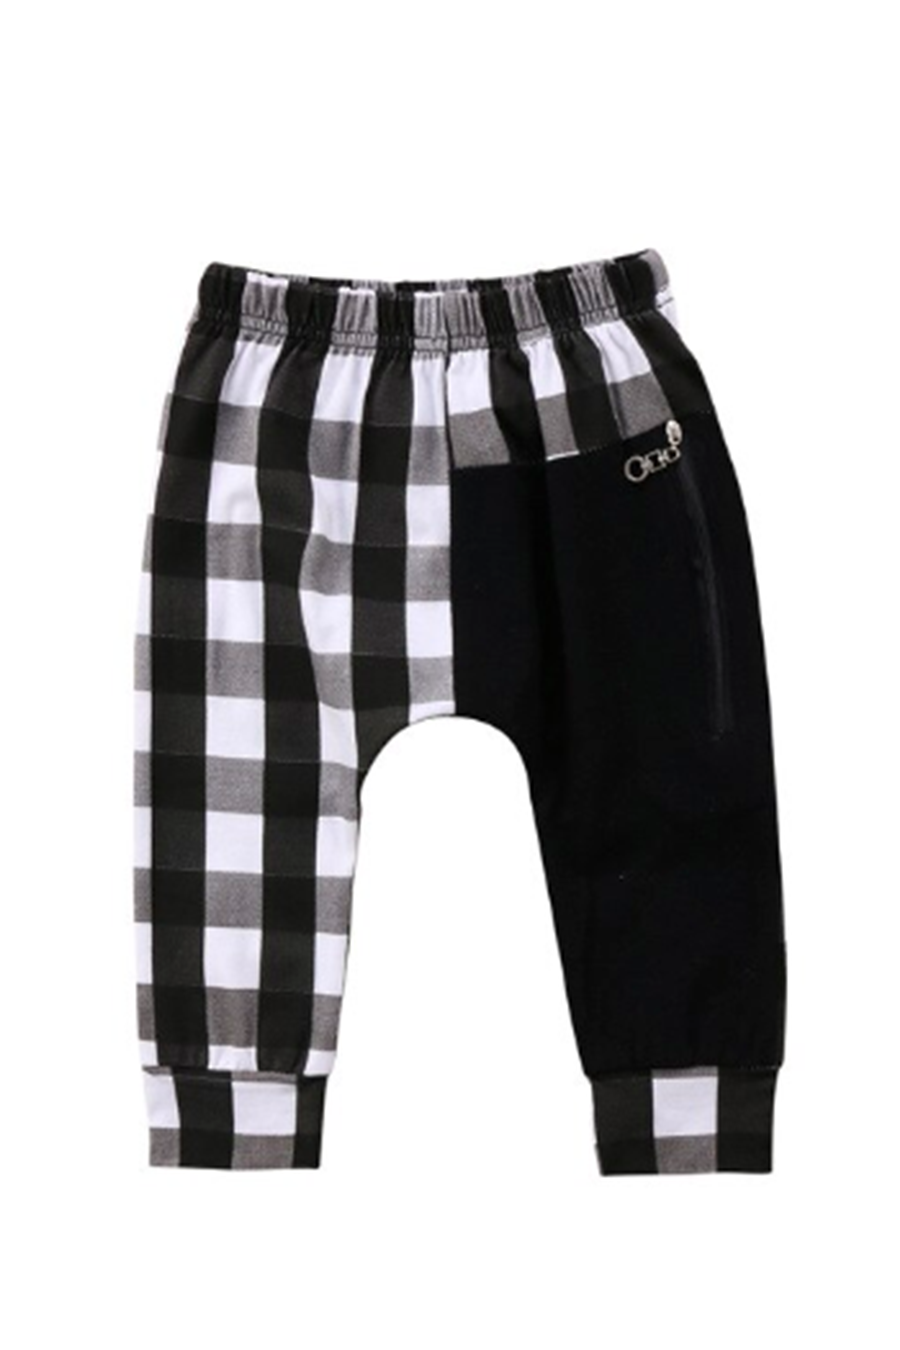 Checkered Kids Jogger | Black/White - Main Image Number 1 of 3